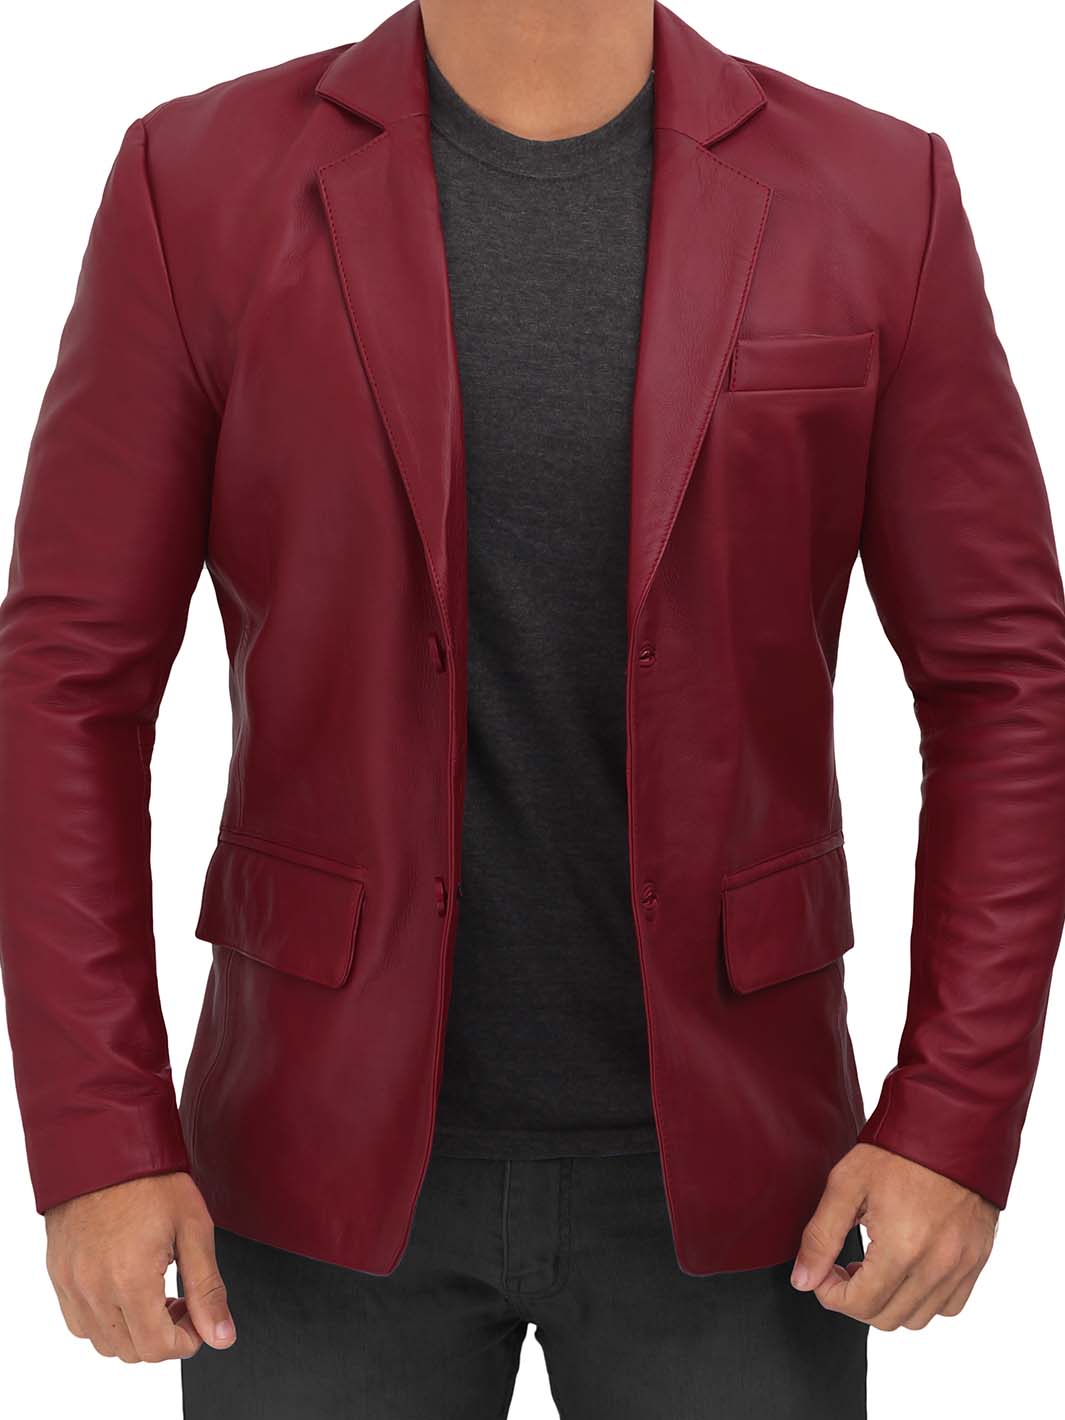 Maroon leather blazer